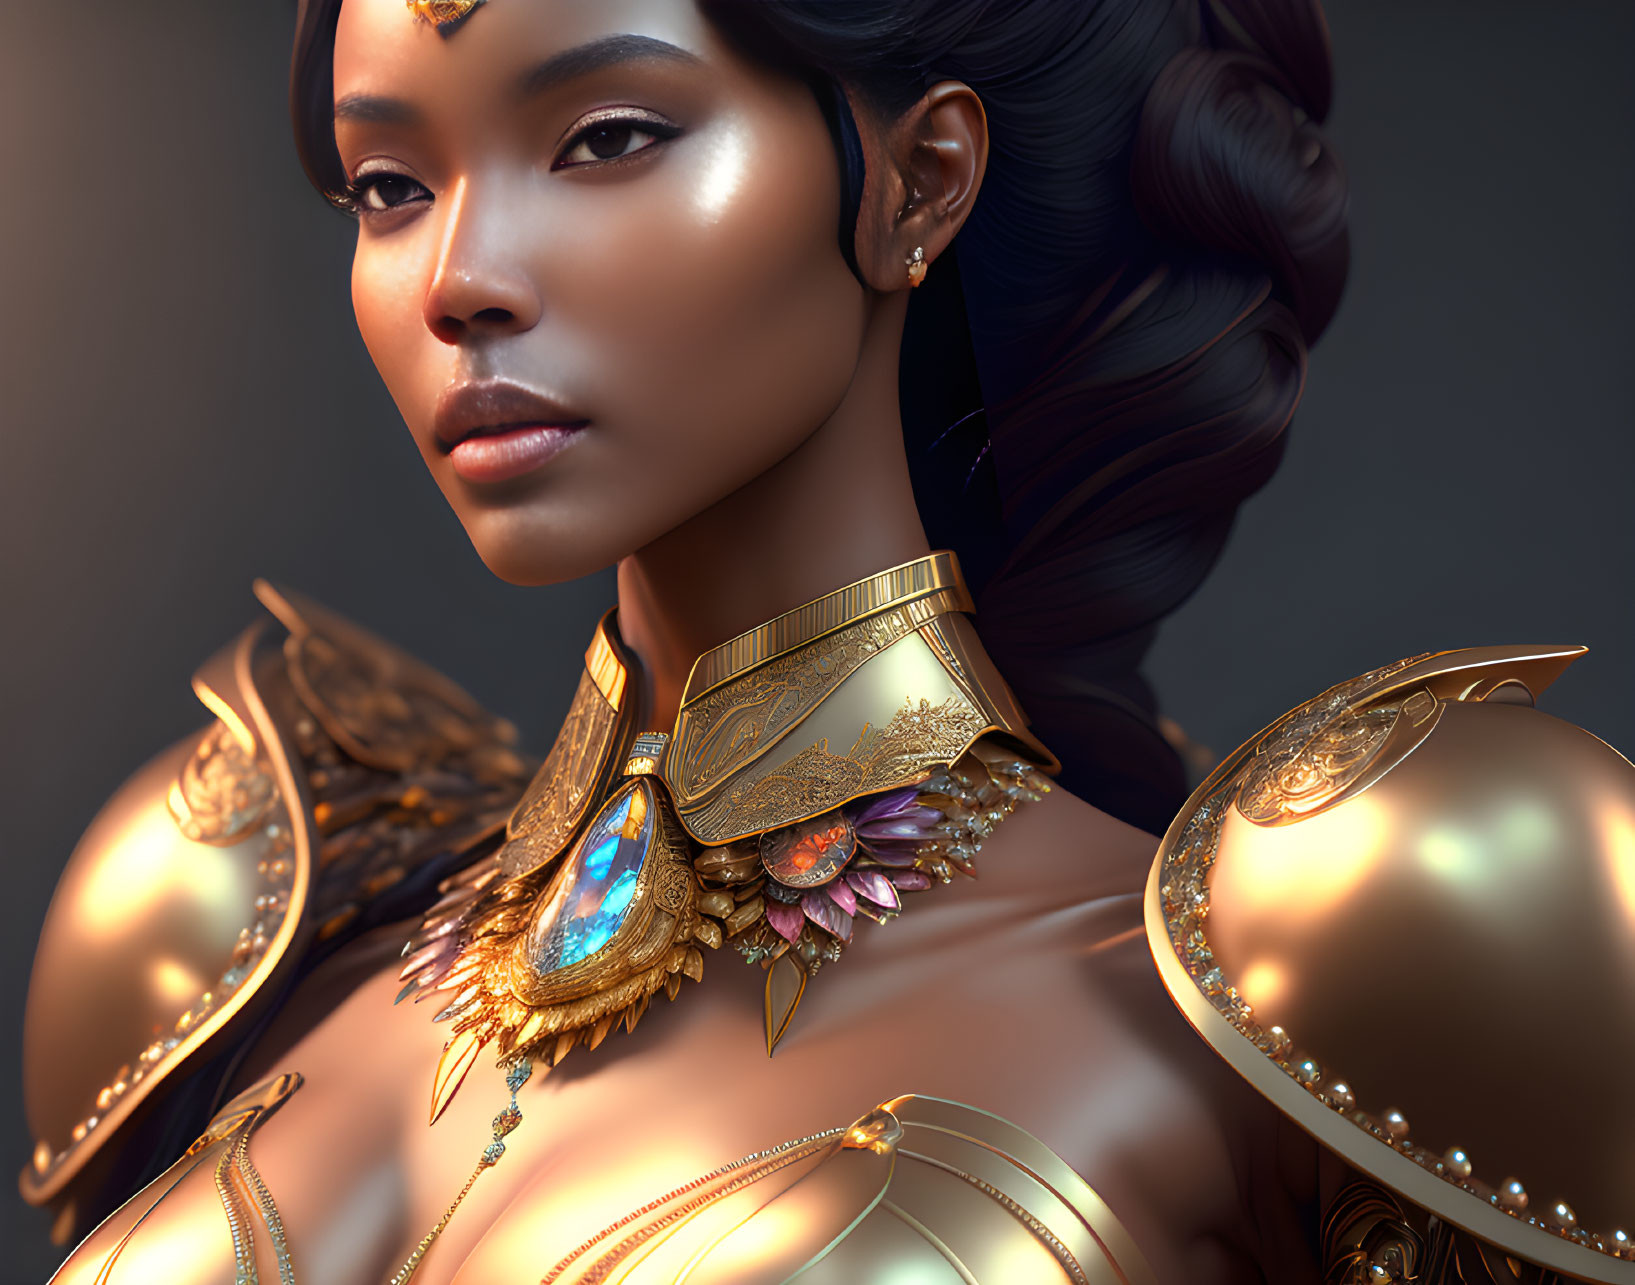 The Ebony Enchantress: A Regal Vision